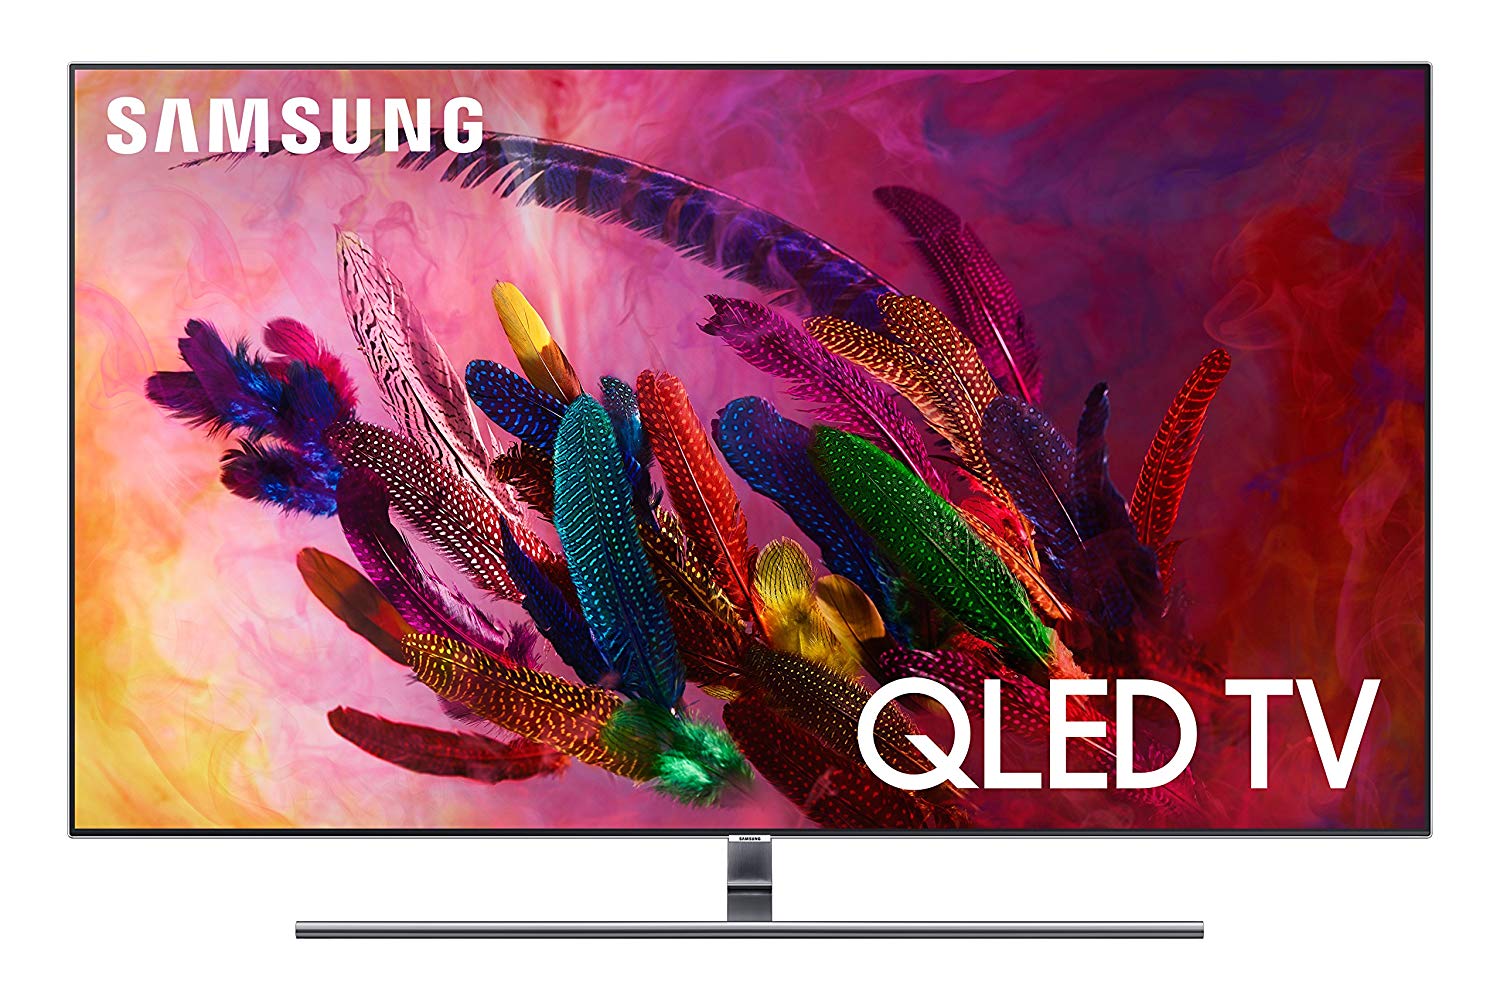 Samsung QN65Q7FN Q Contrast Plus Smart TV, 65-Inch